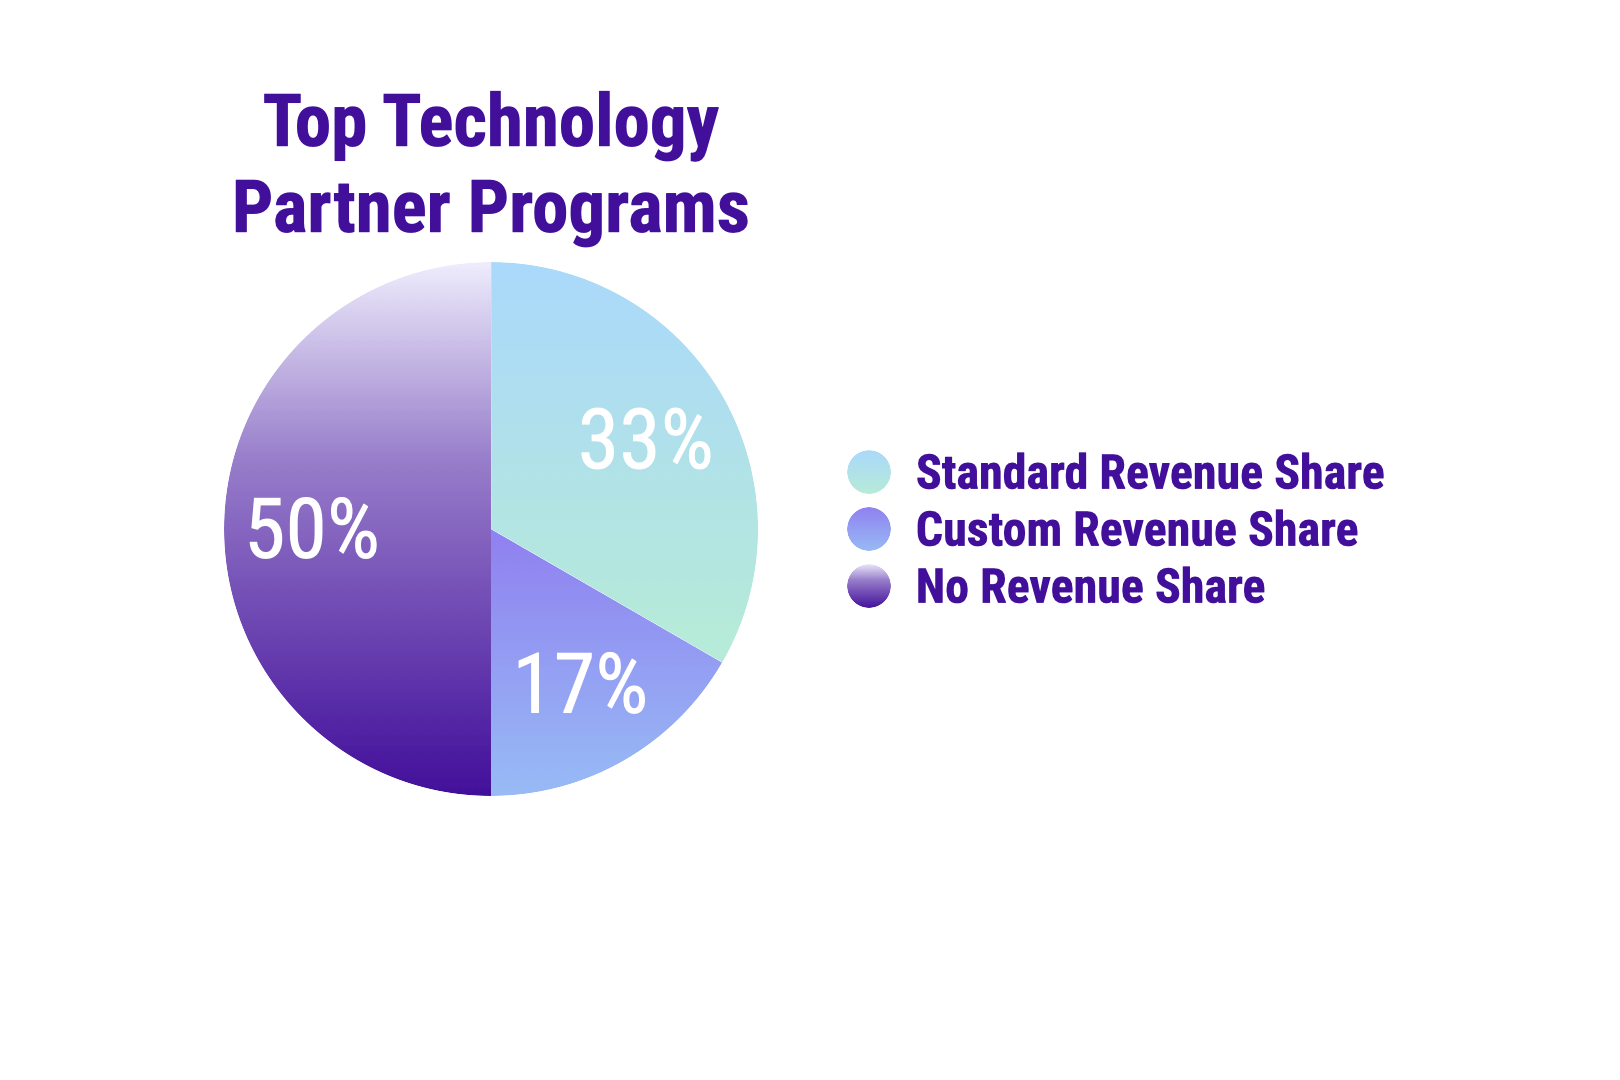 Top Technology Partner Programs Revenue Share